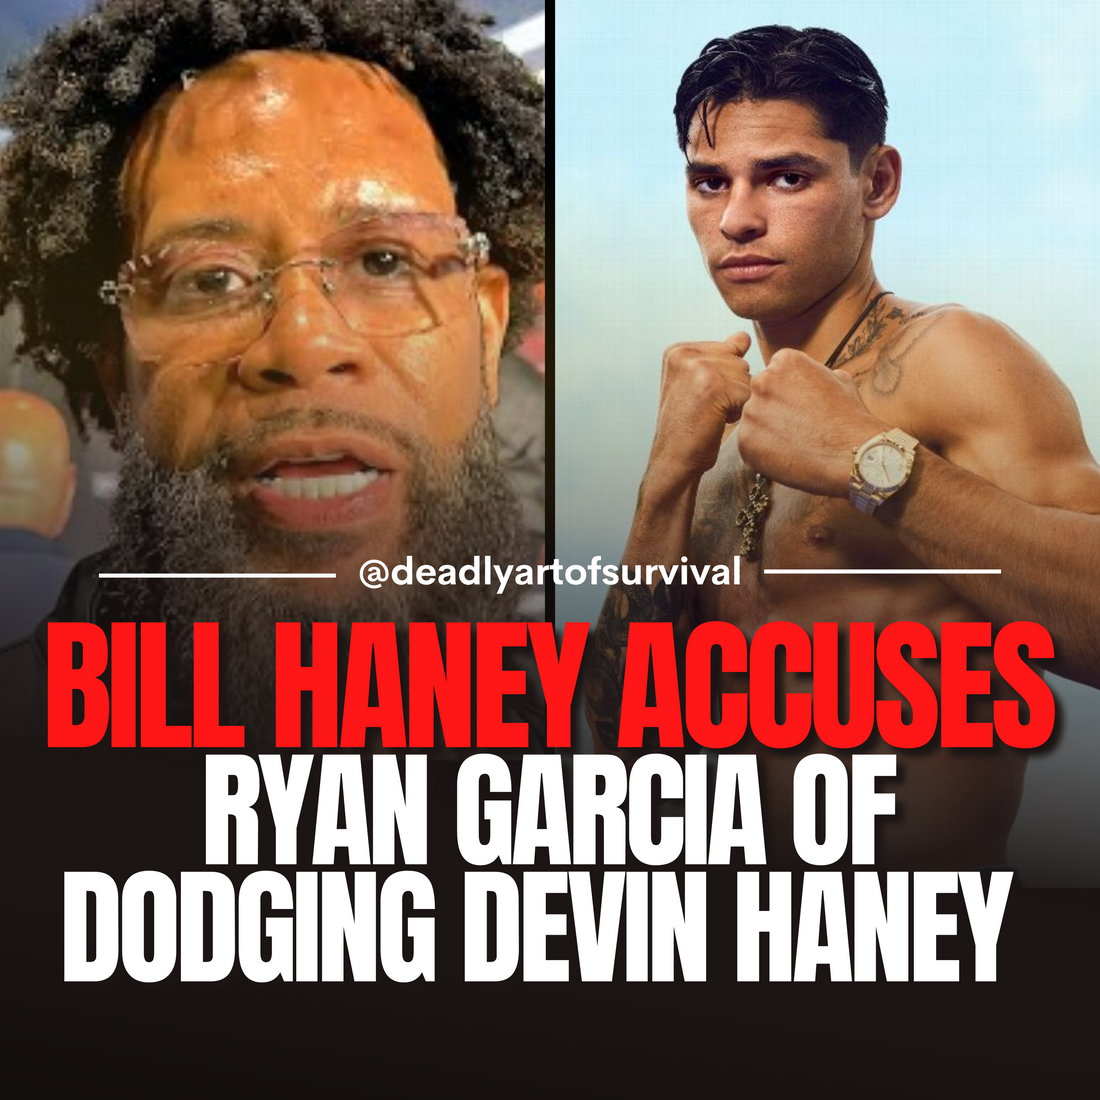 Bill-Haney-Accuses-Ryan-Garcia-of-Fear-Claims-Avoidance-in-Devin-Haney-Showdown deadlyartofsurvival.com